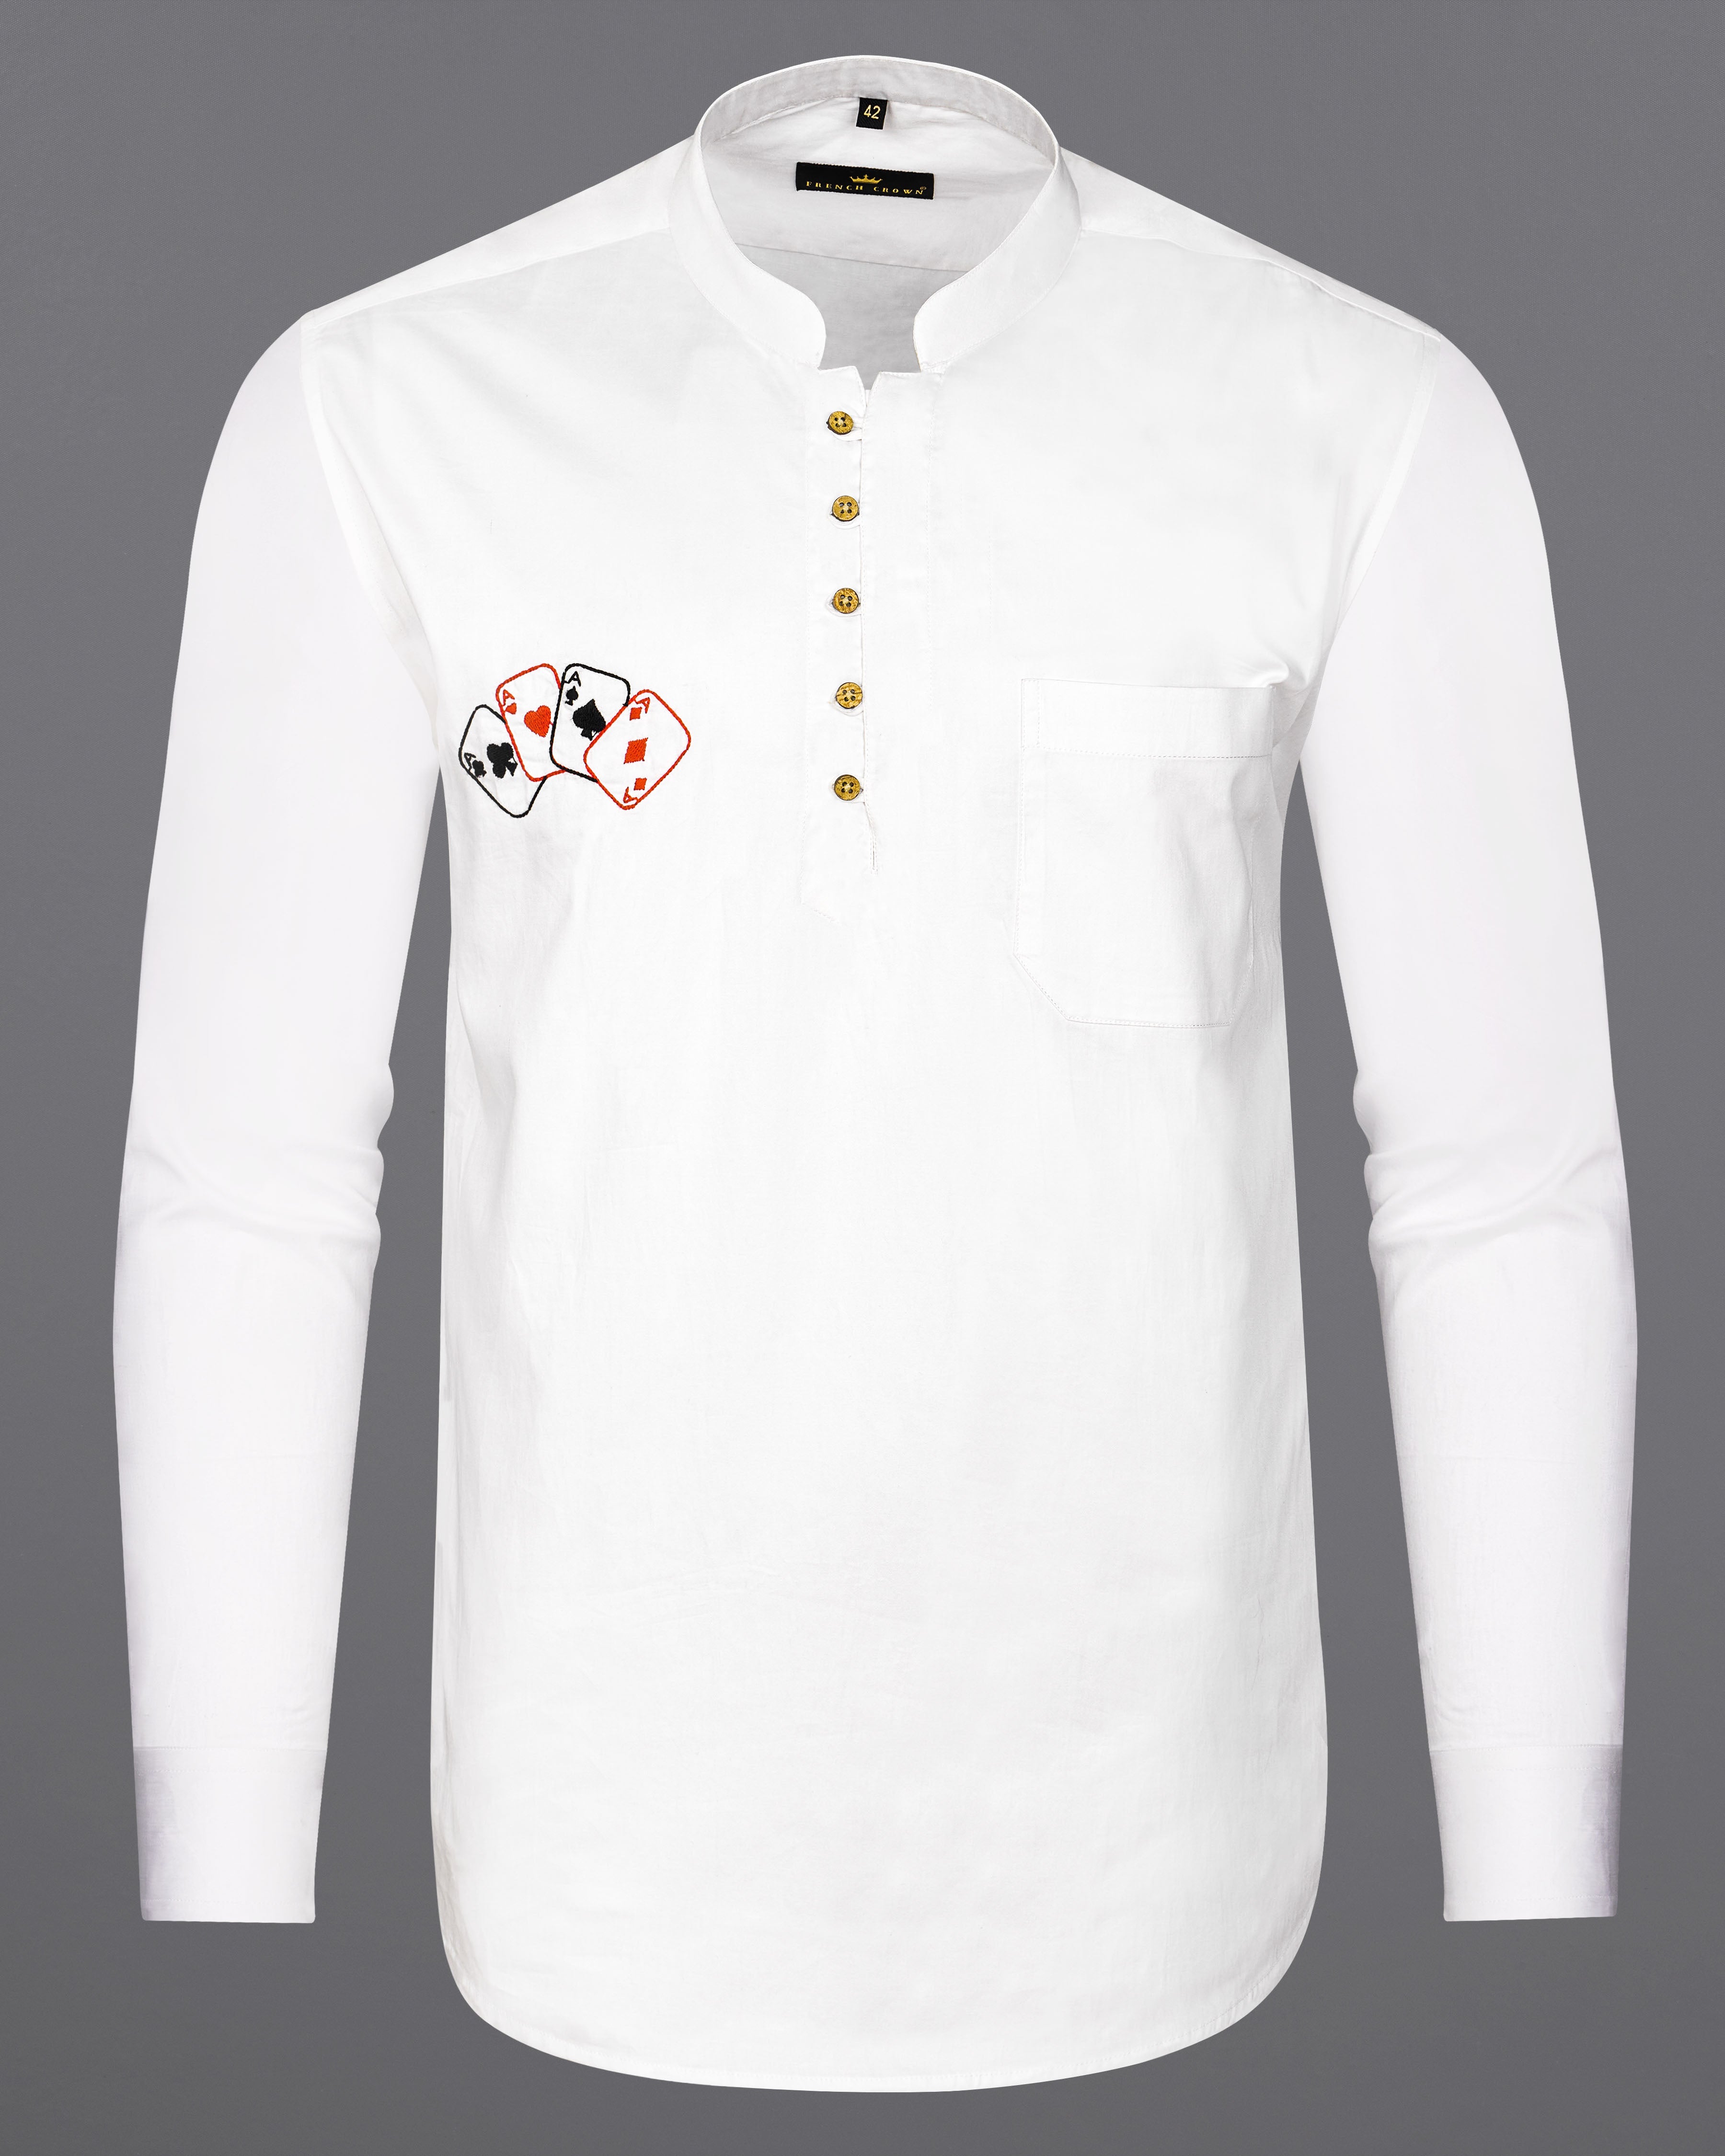 Bright White Subtle Sheen with Multicolour Card Embroidered Super Soft Premium Cotton Kurta Shirt 2670-KS-E027-38,2670-KS-E027-H-38,2670-KS-E027-39,2670-KS-E027-H-39,2670-KS-E027-40,2670-KS-E027-H-40,2670-KS-E027-42,2670-KS-E027-H-42,2670-KS-E027-44,2670-KS-E027-H-44,2670-KS-E027-46,2670-KS-E027-H-46,2670-KS-E027-48,2670-KS-E027-H-48,2670-KS-E027-50,2670-KS-E027-H-50,2670-KS-E027-52,2670-KS-E027-H-52